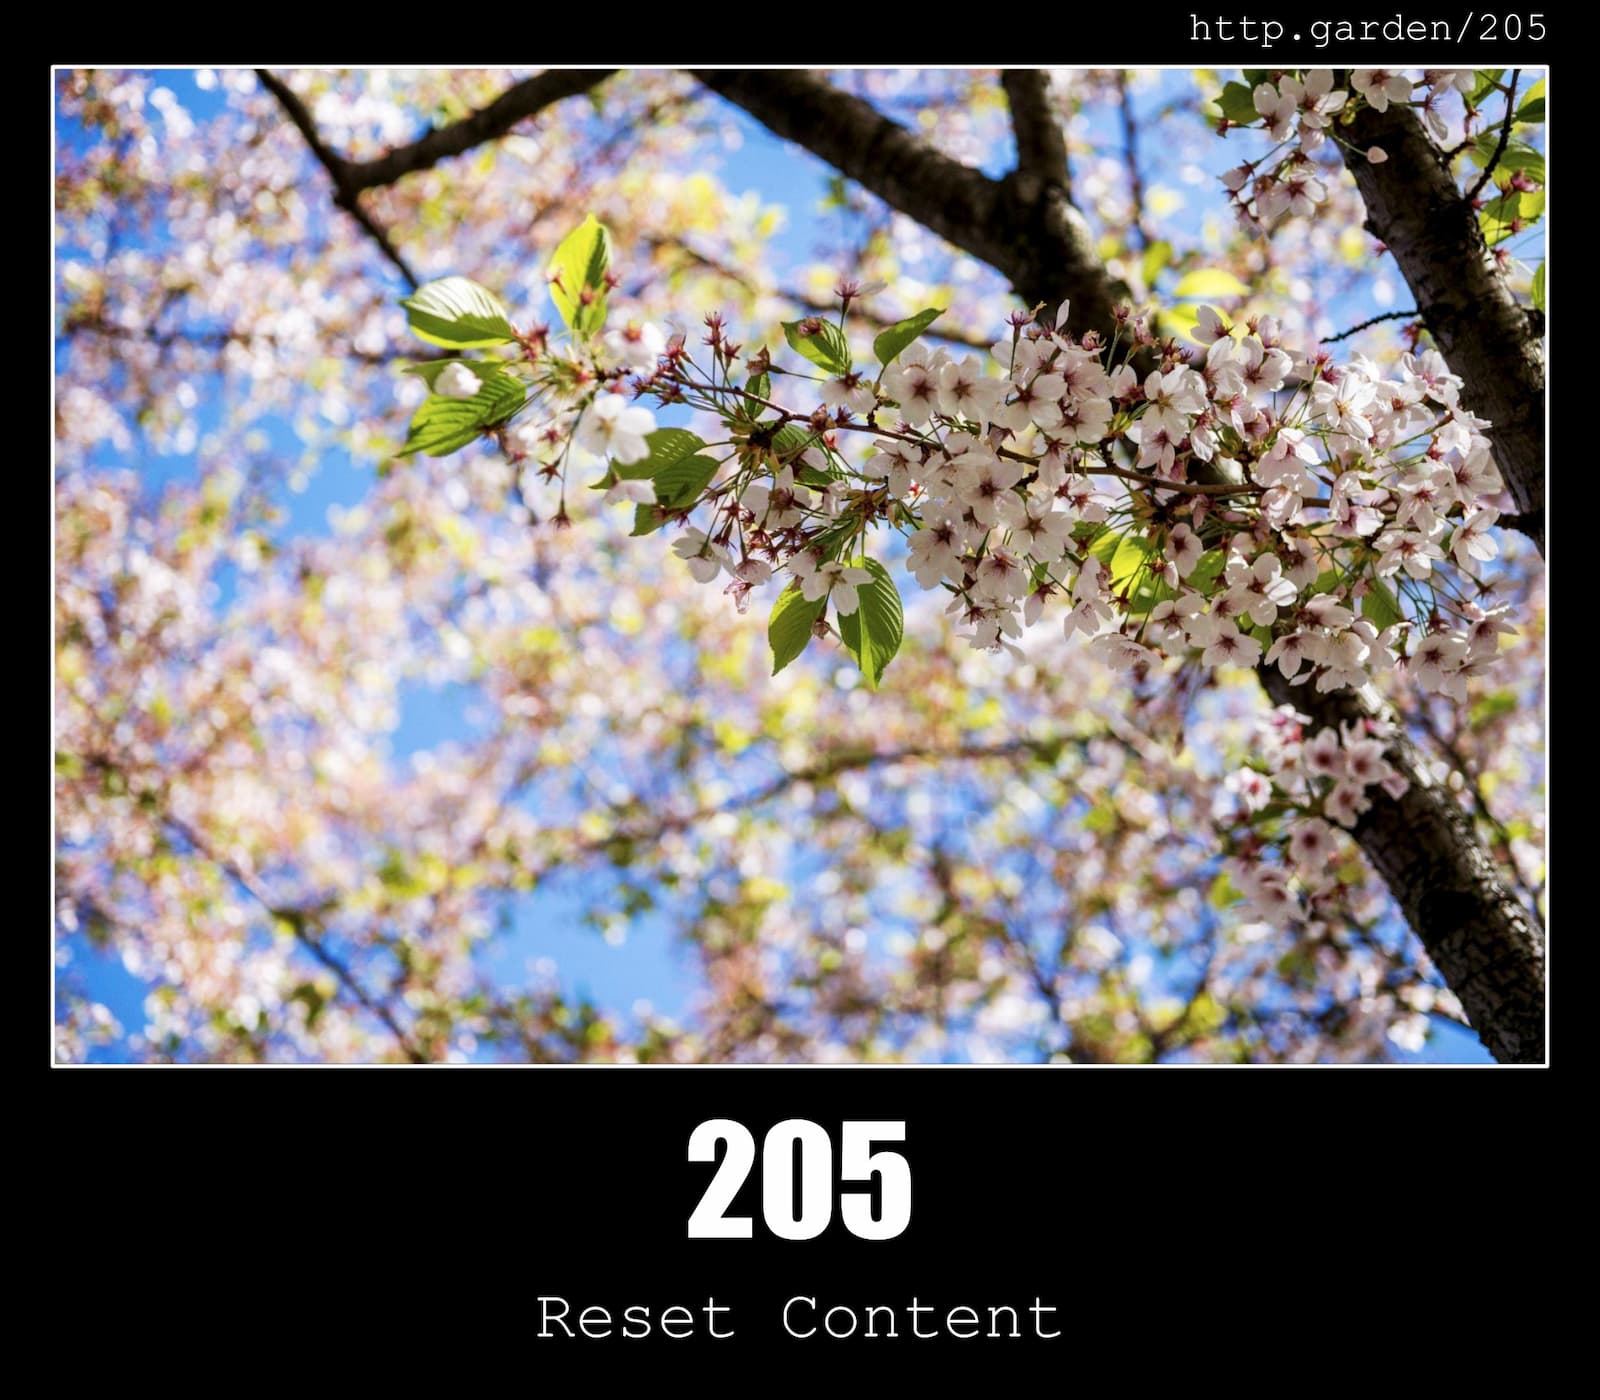 HTTP Status Code 205 Reset Content & Gardening